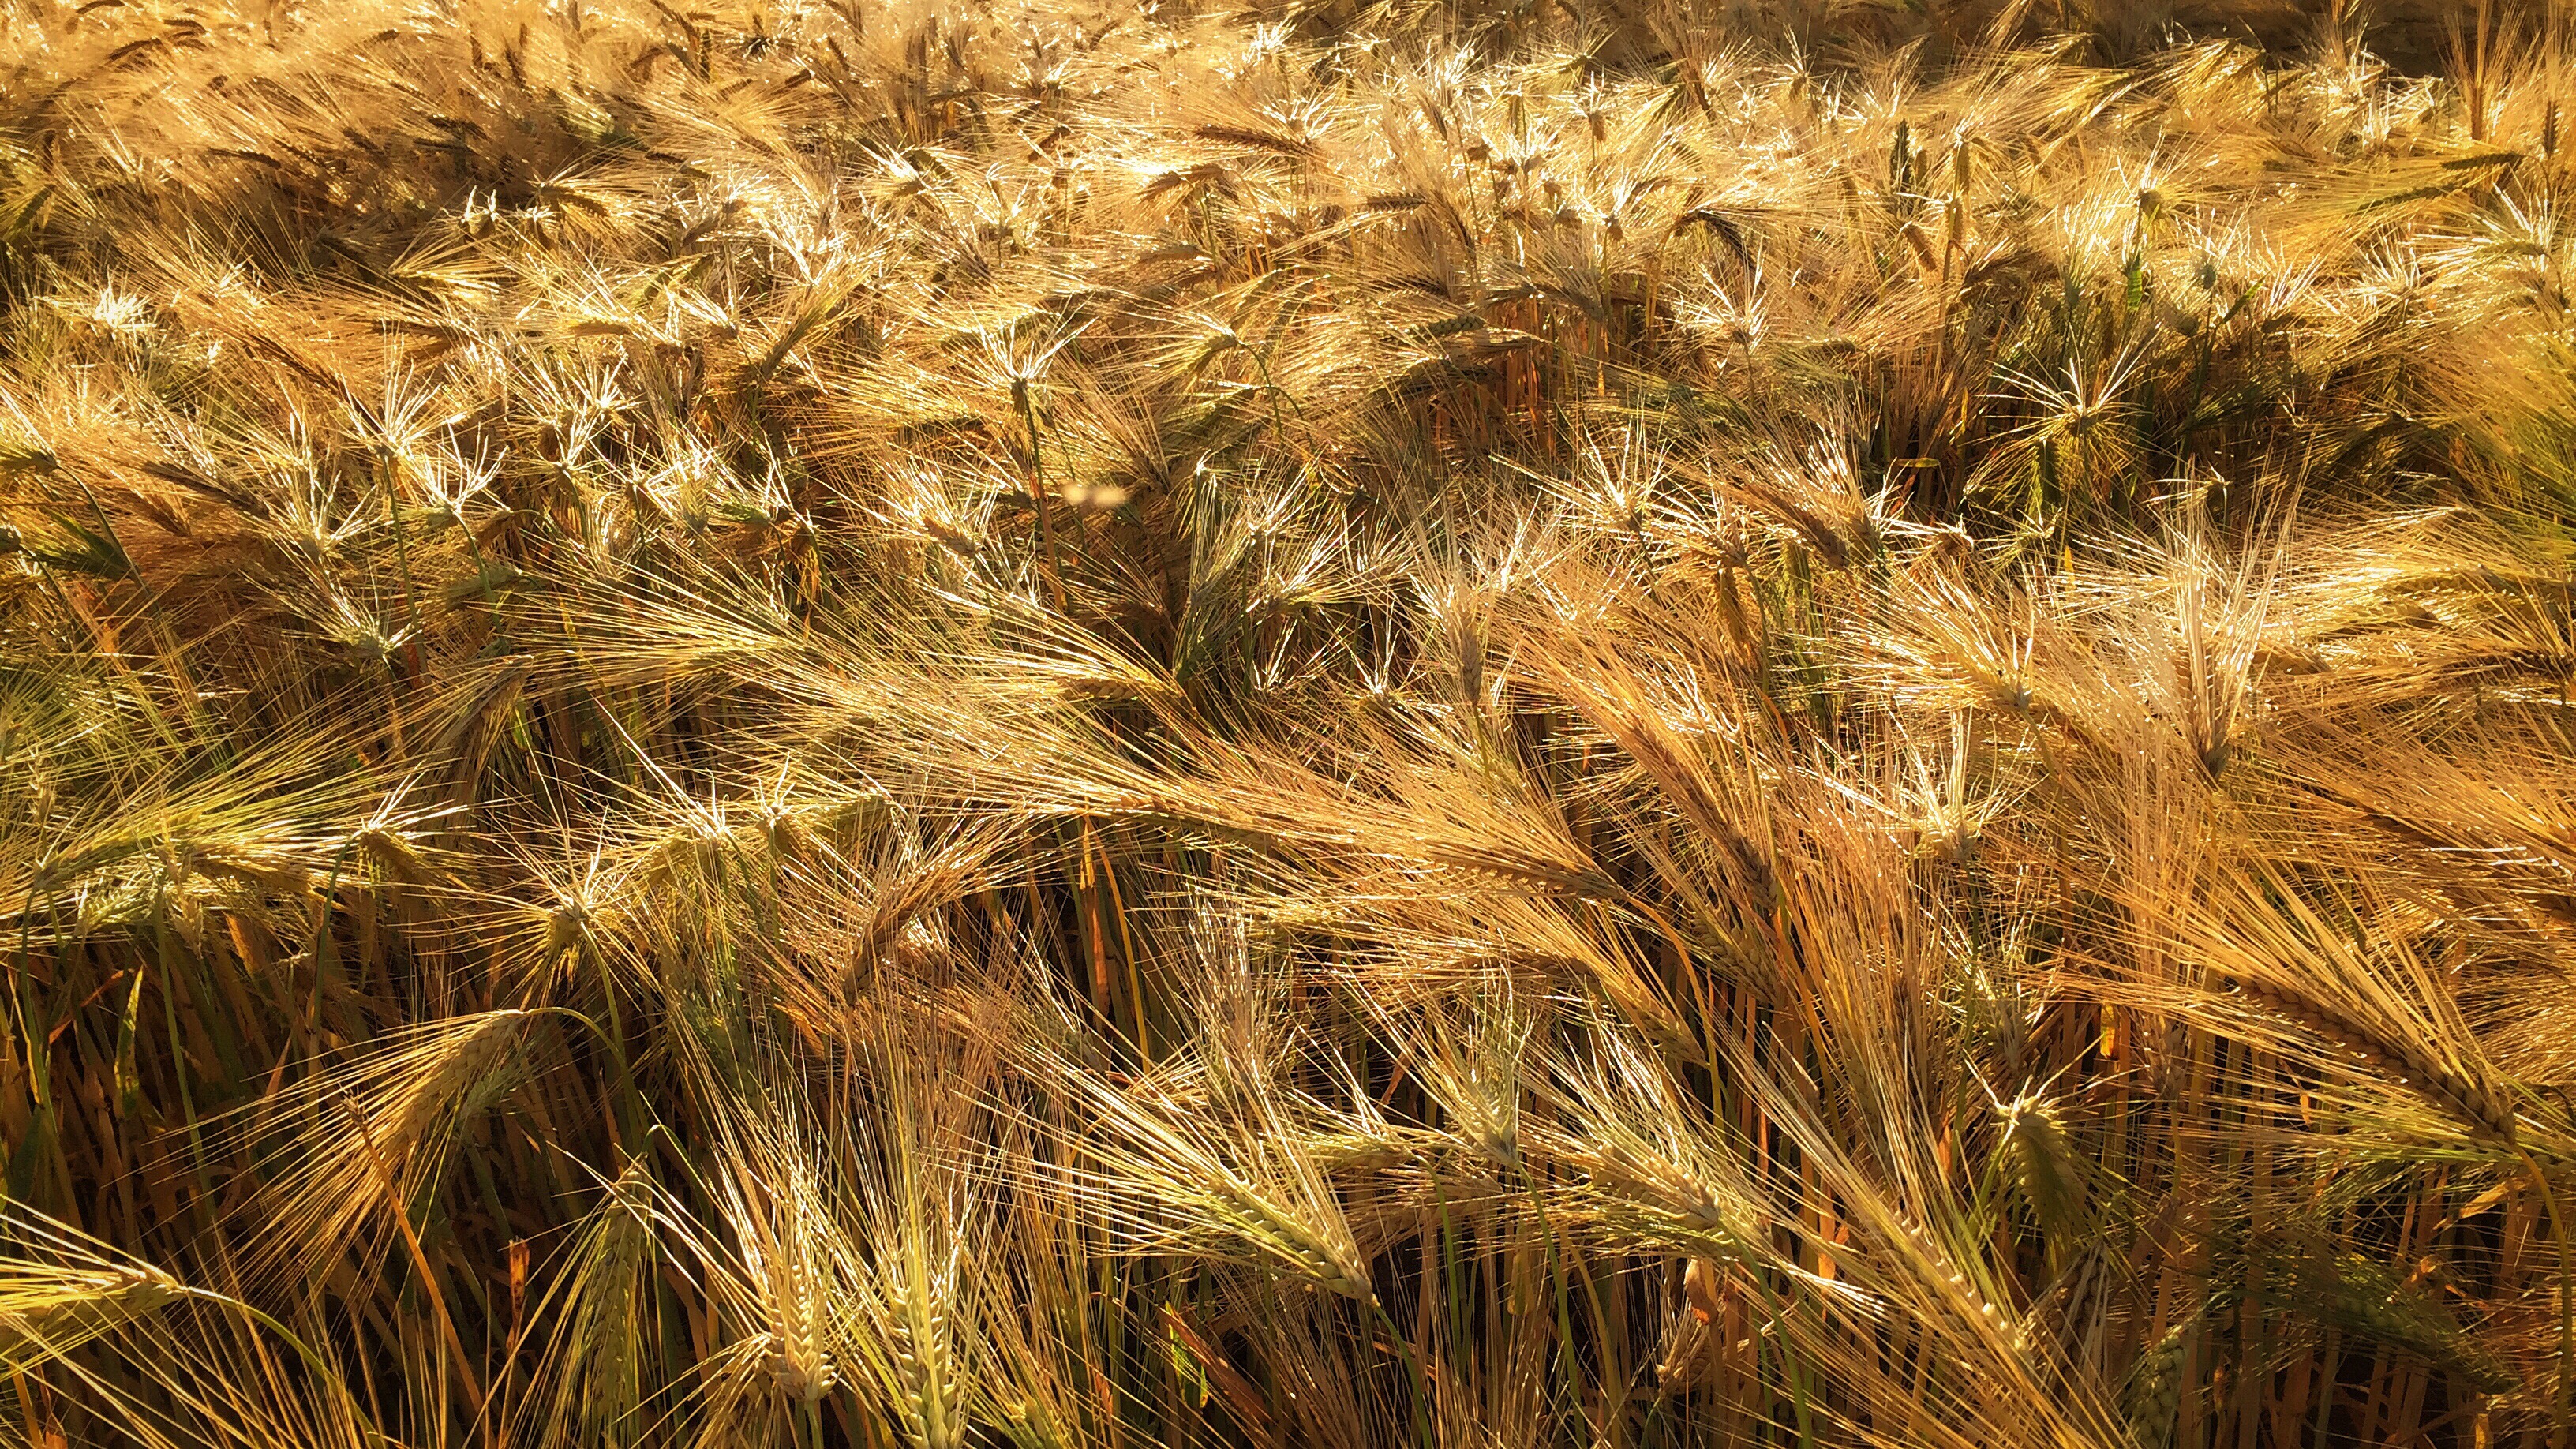 Day 265.2 – Older wheat